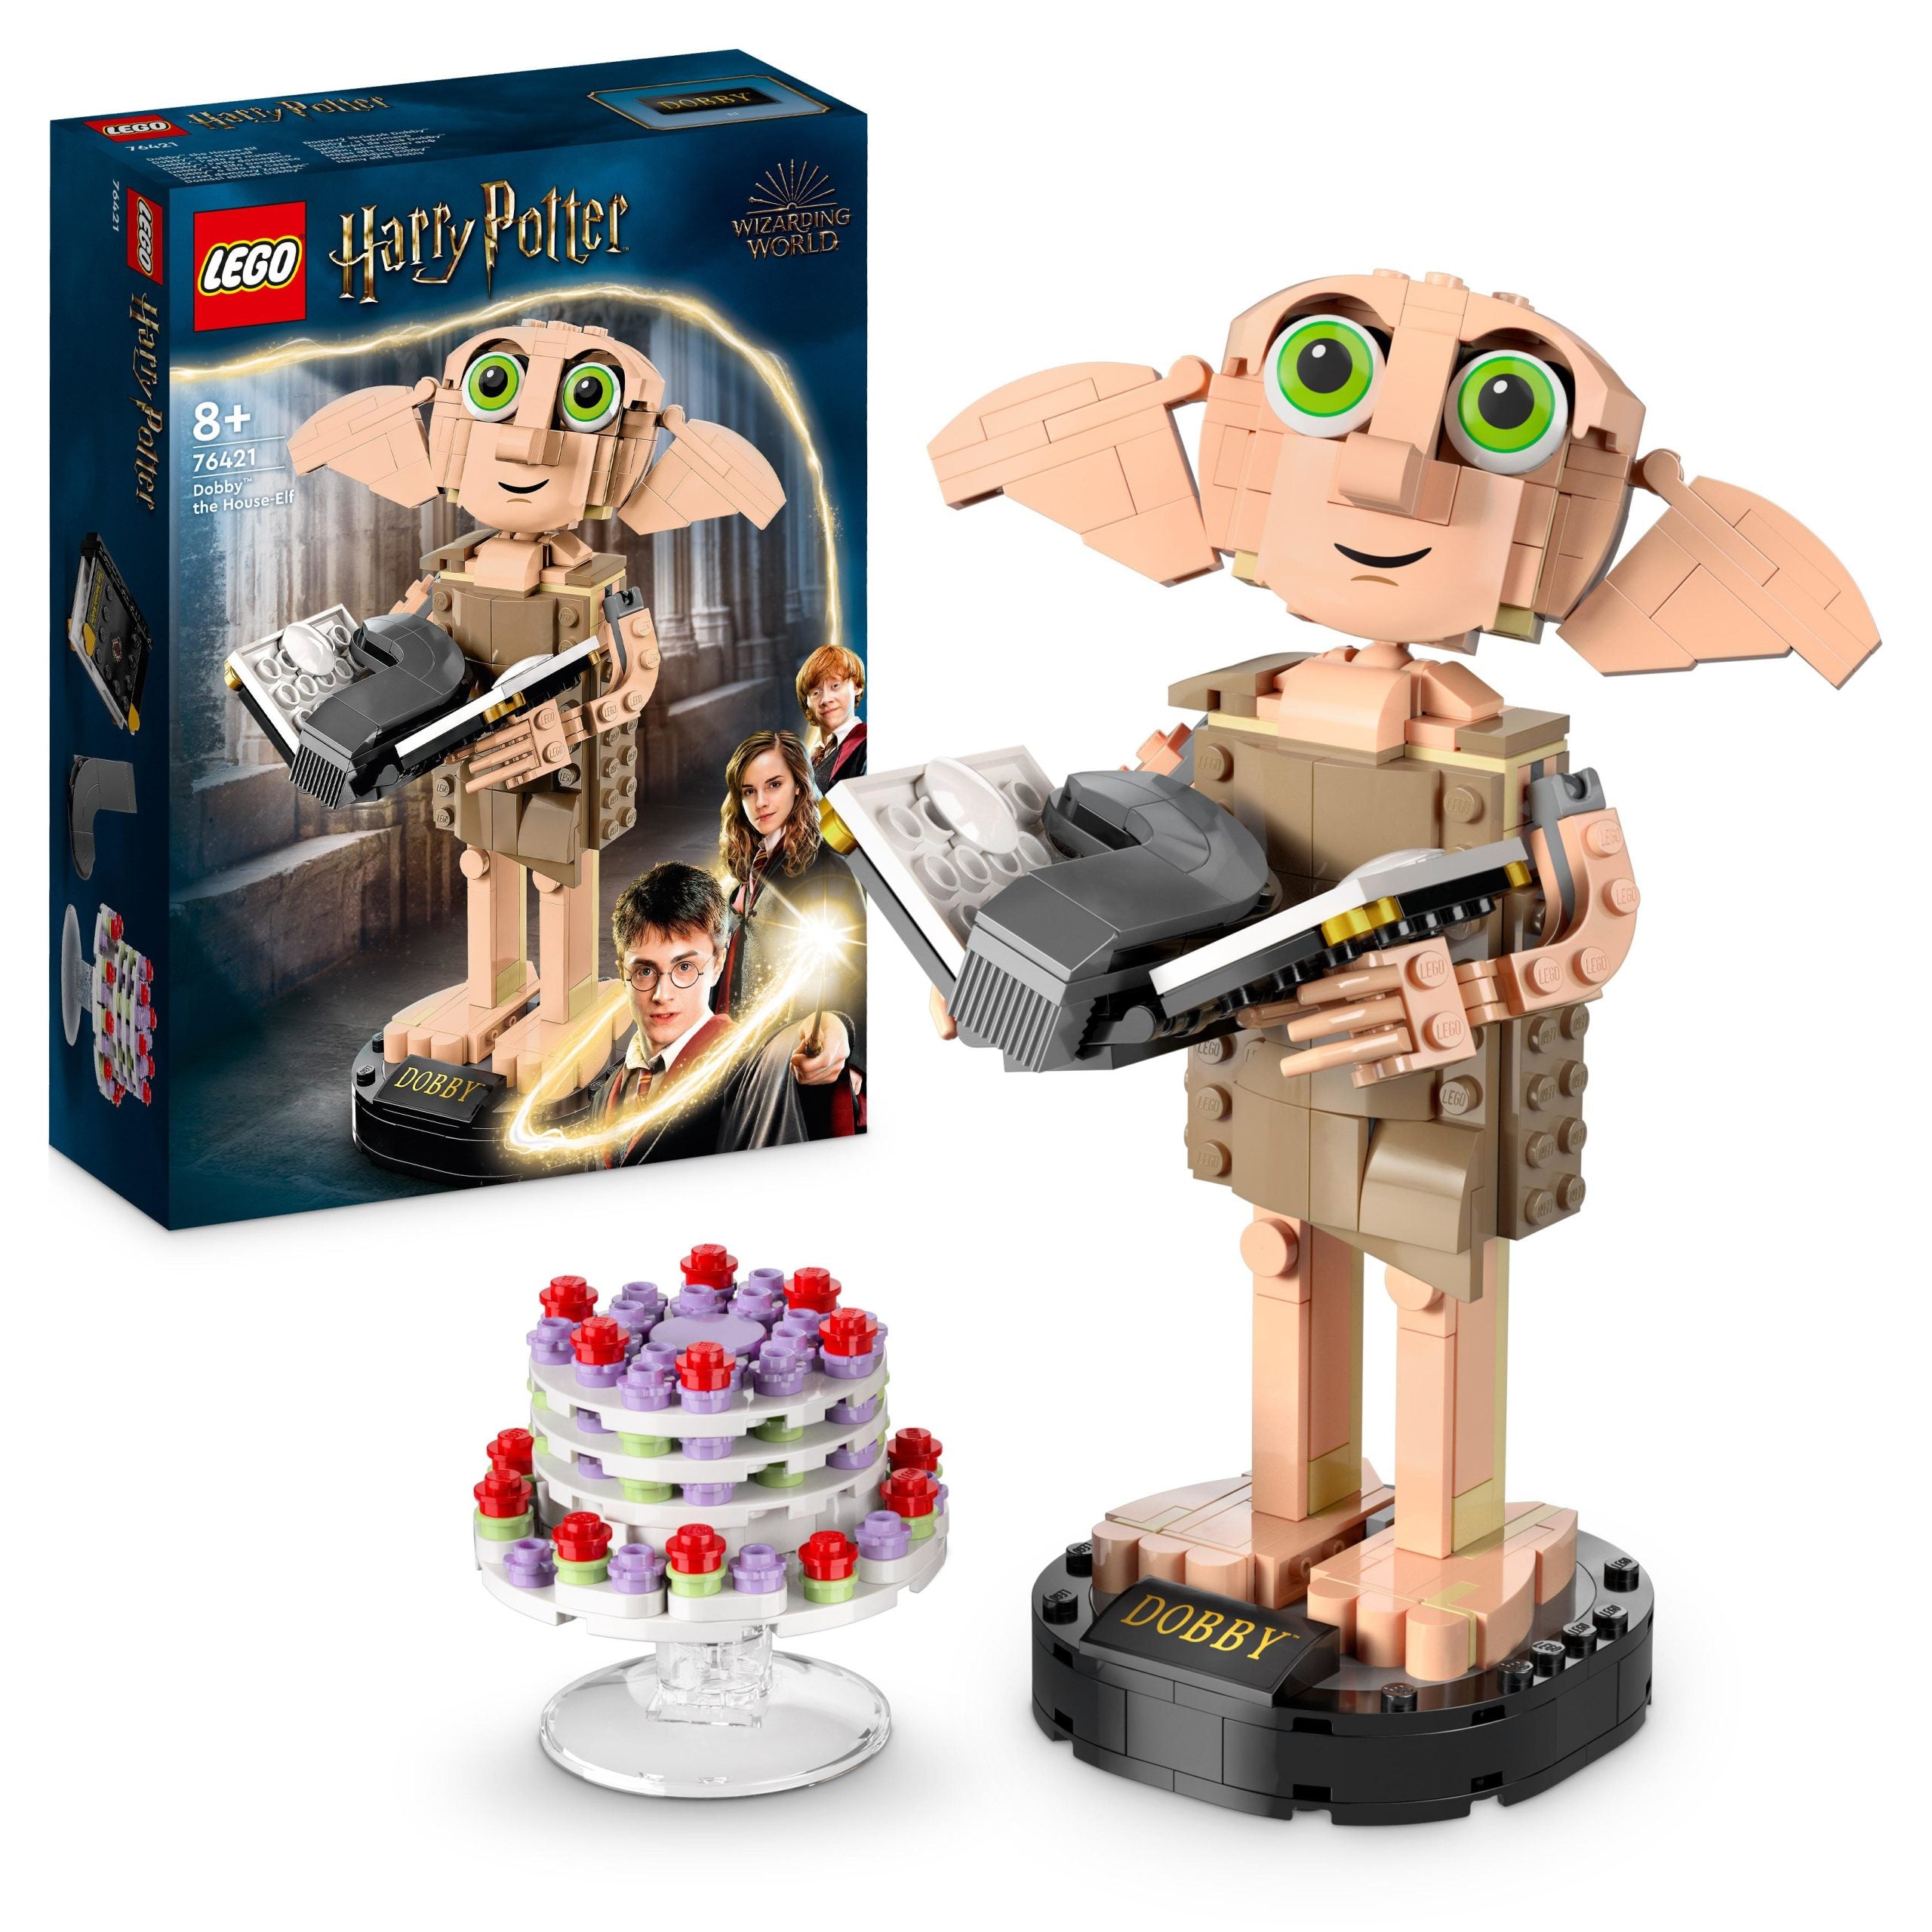 76421 - LEGO Harry Potter - Dobby, l'elfo domestico